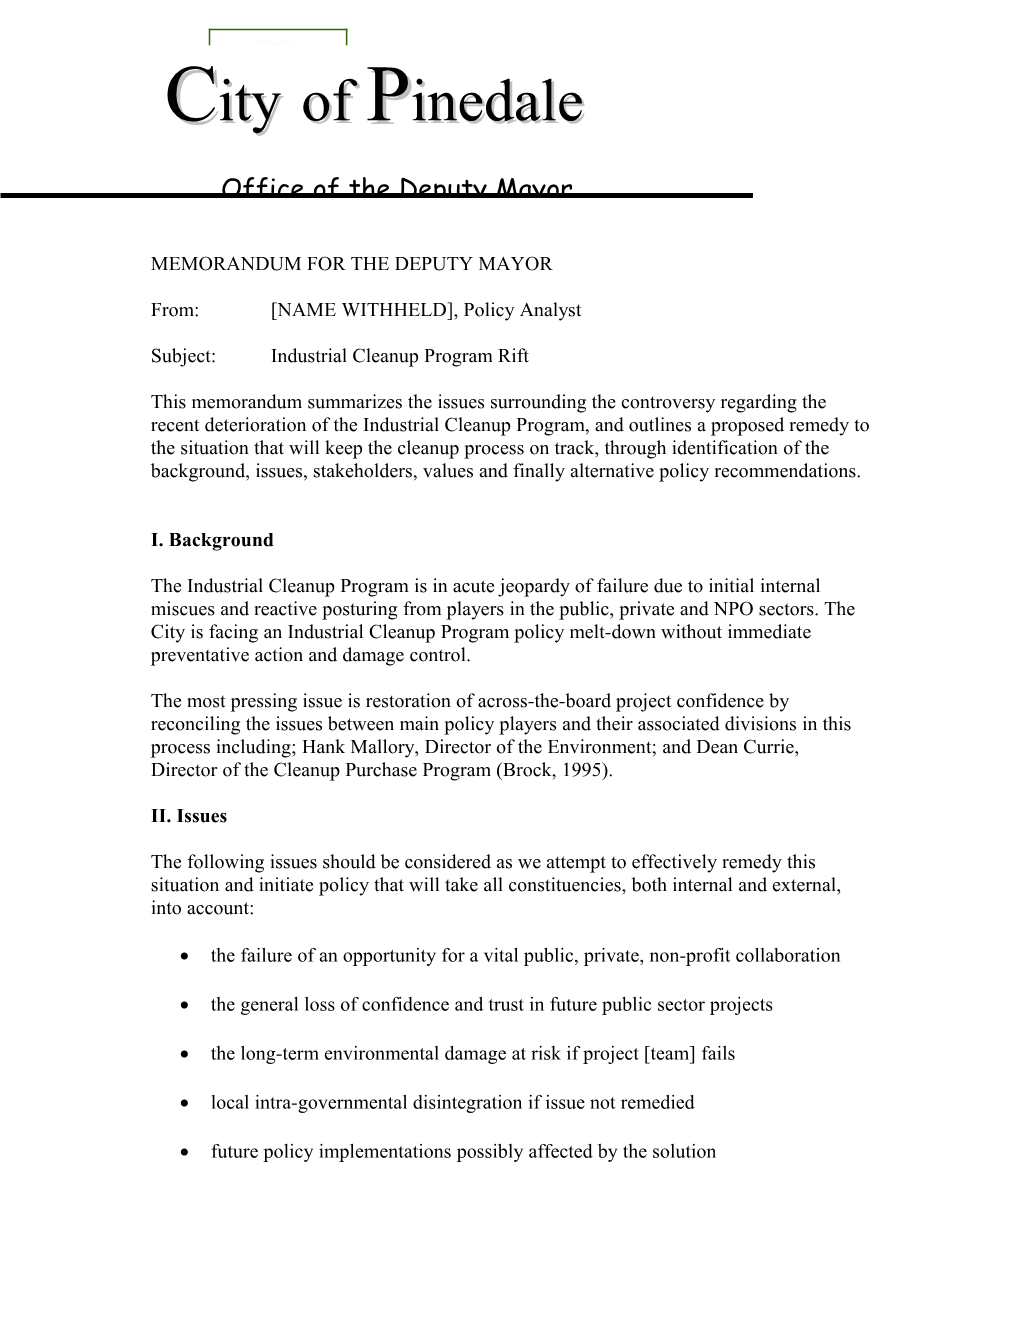 Memorandum for the Deputy Mayor